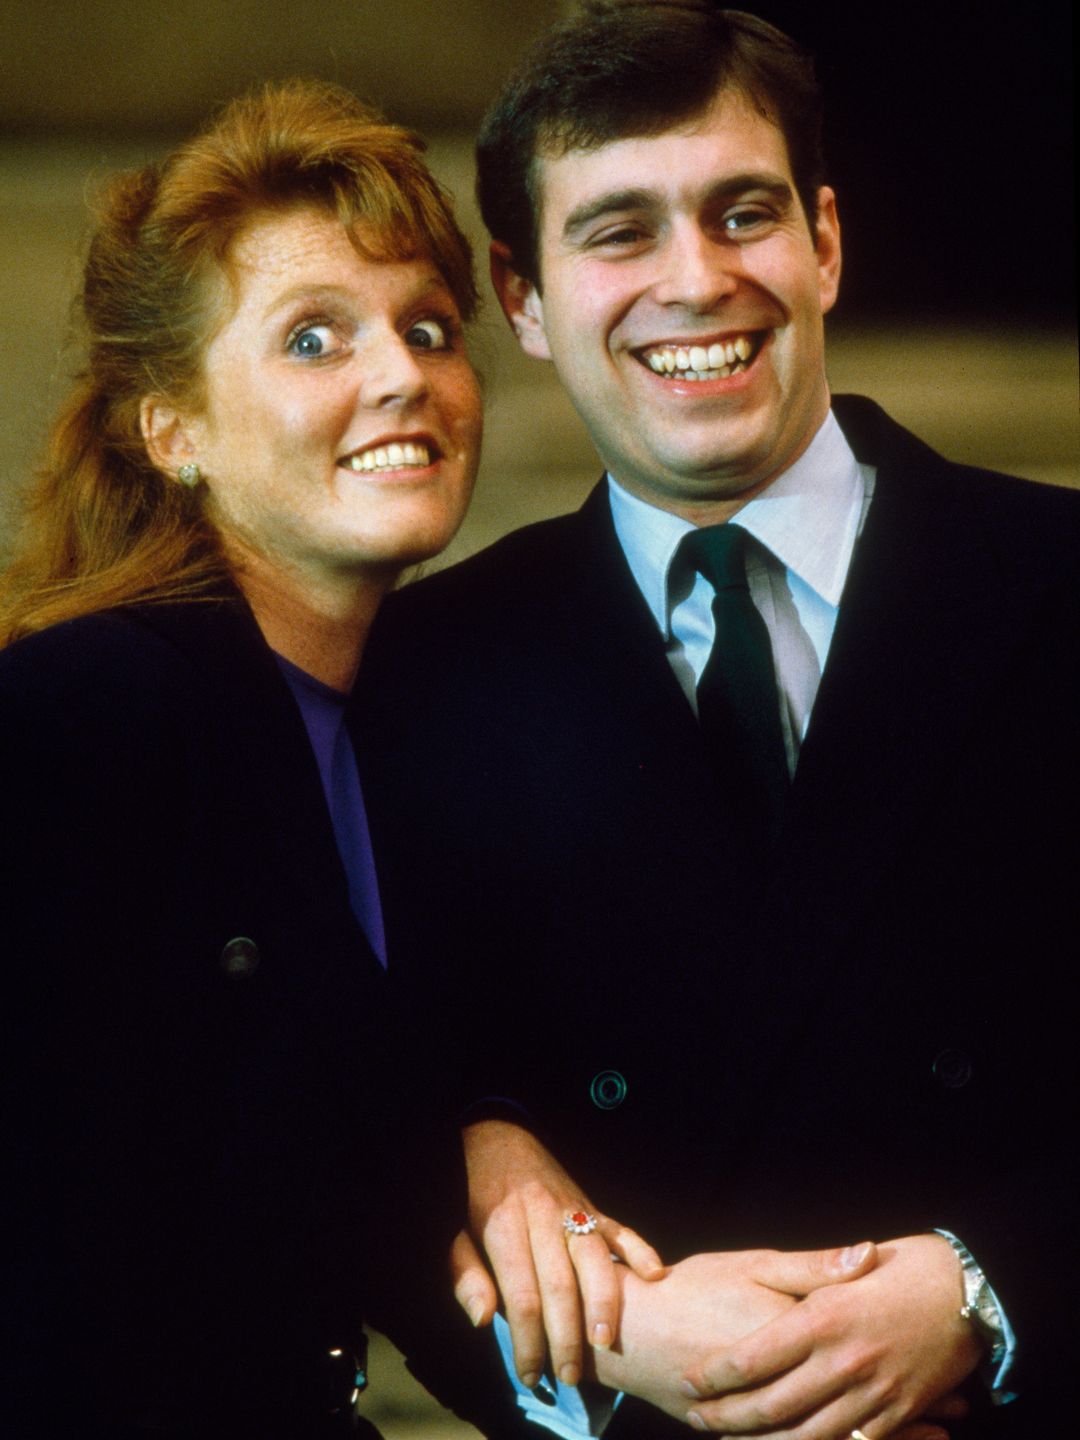 Sarah Ferguson and Prince Andrew smiling